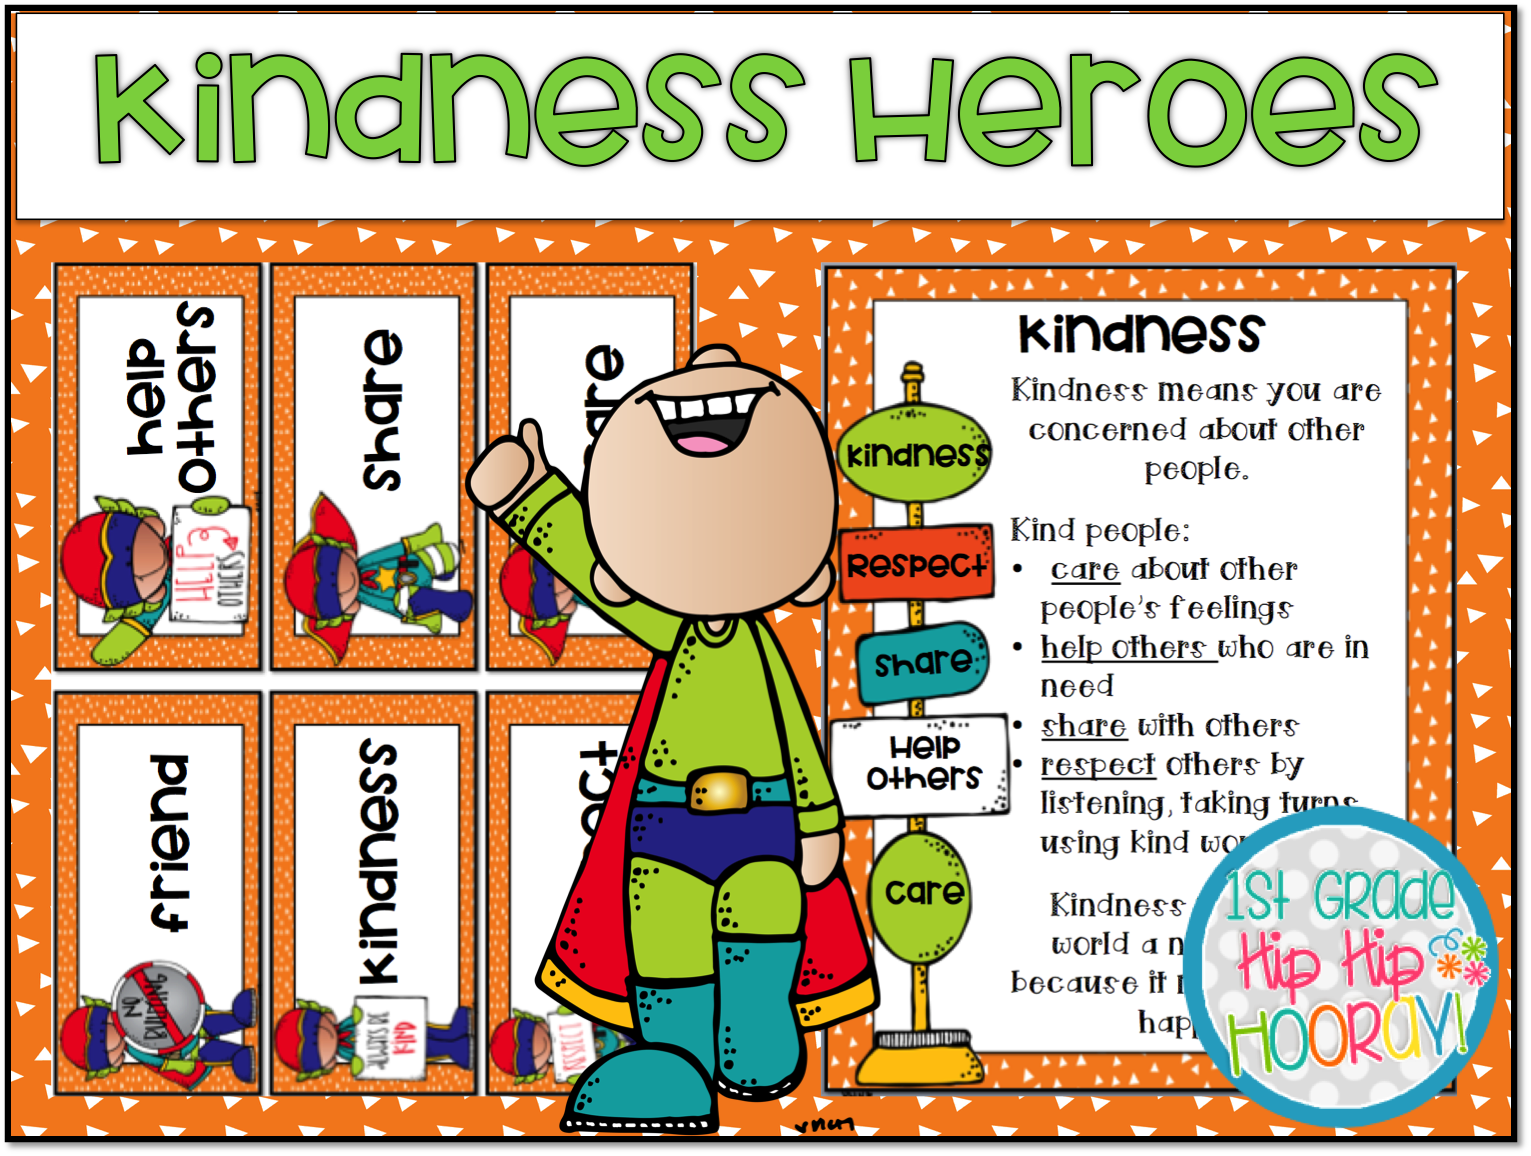 1st-grade-hip-hip-hooray-kindness-counts